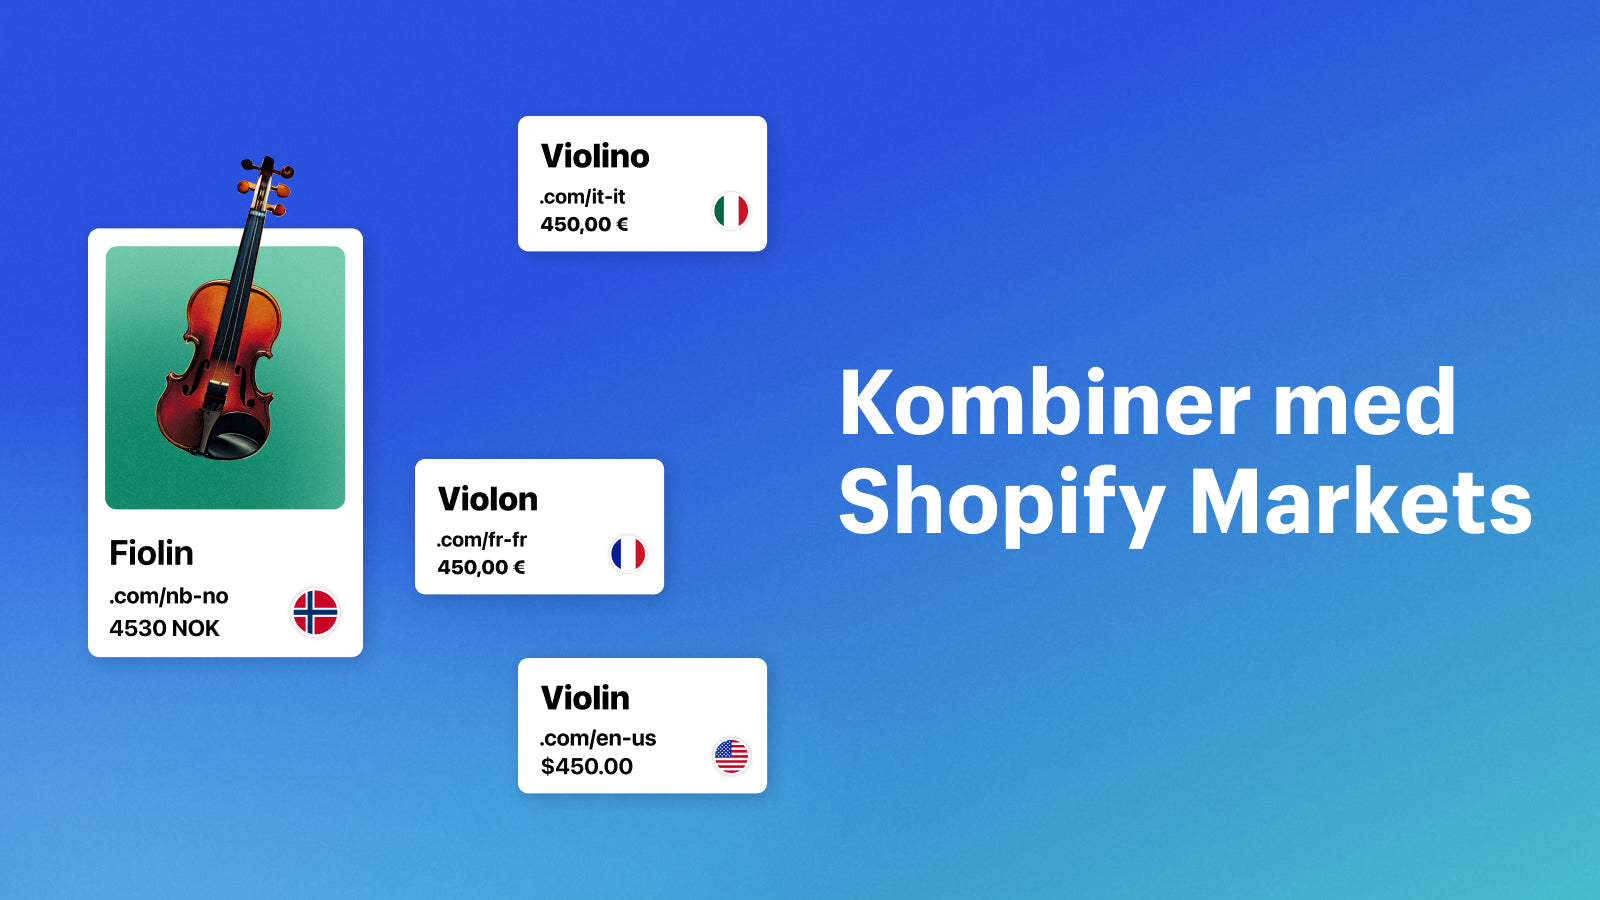 Kombiner med Shopify Markets